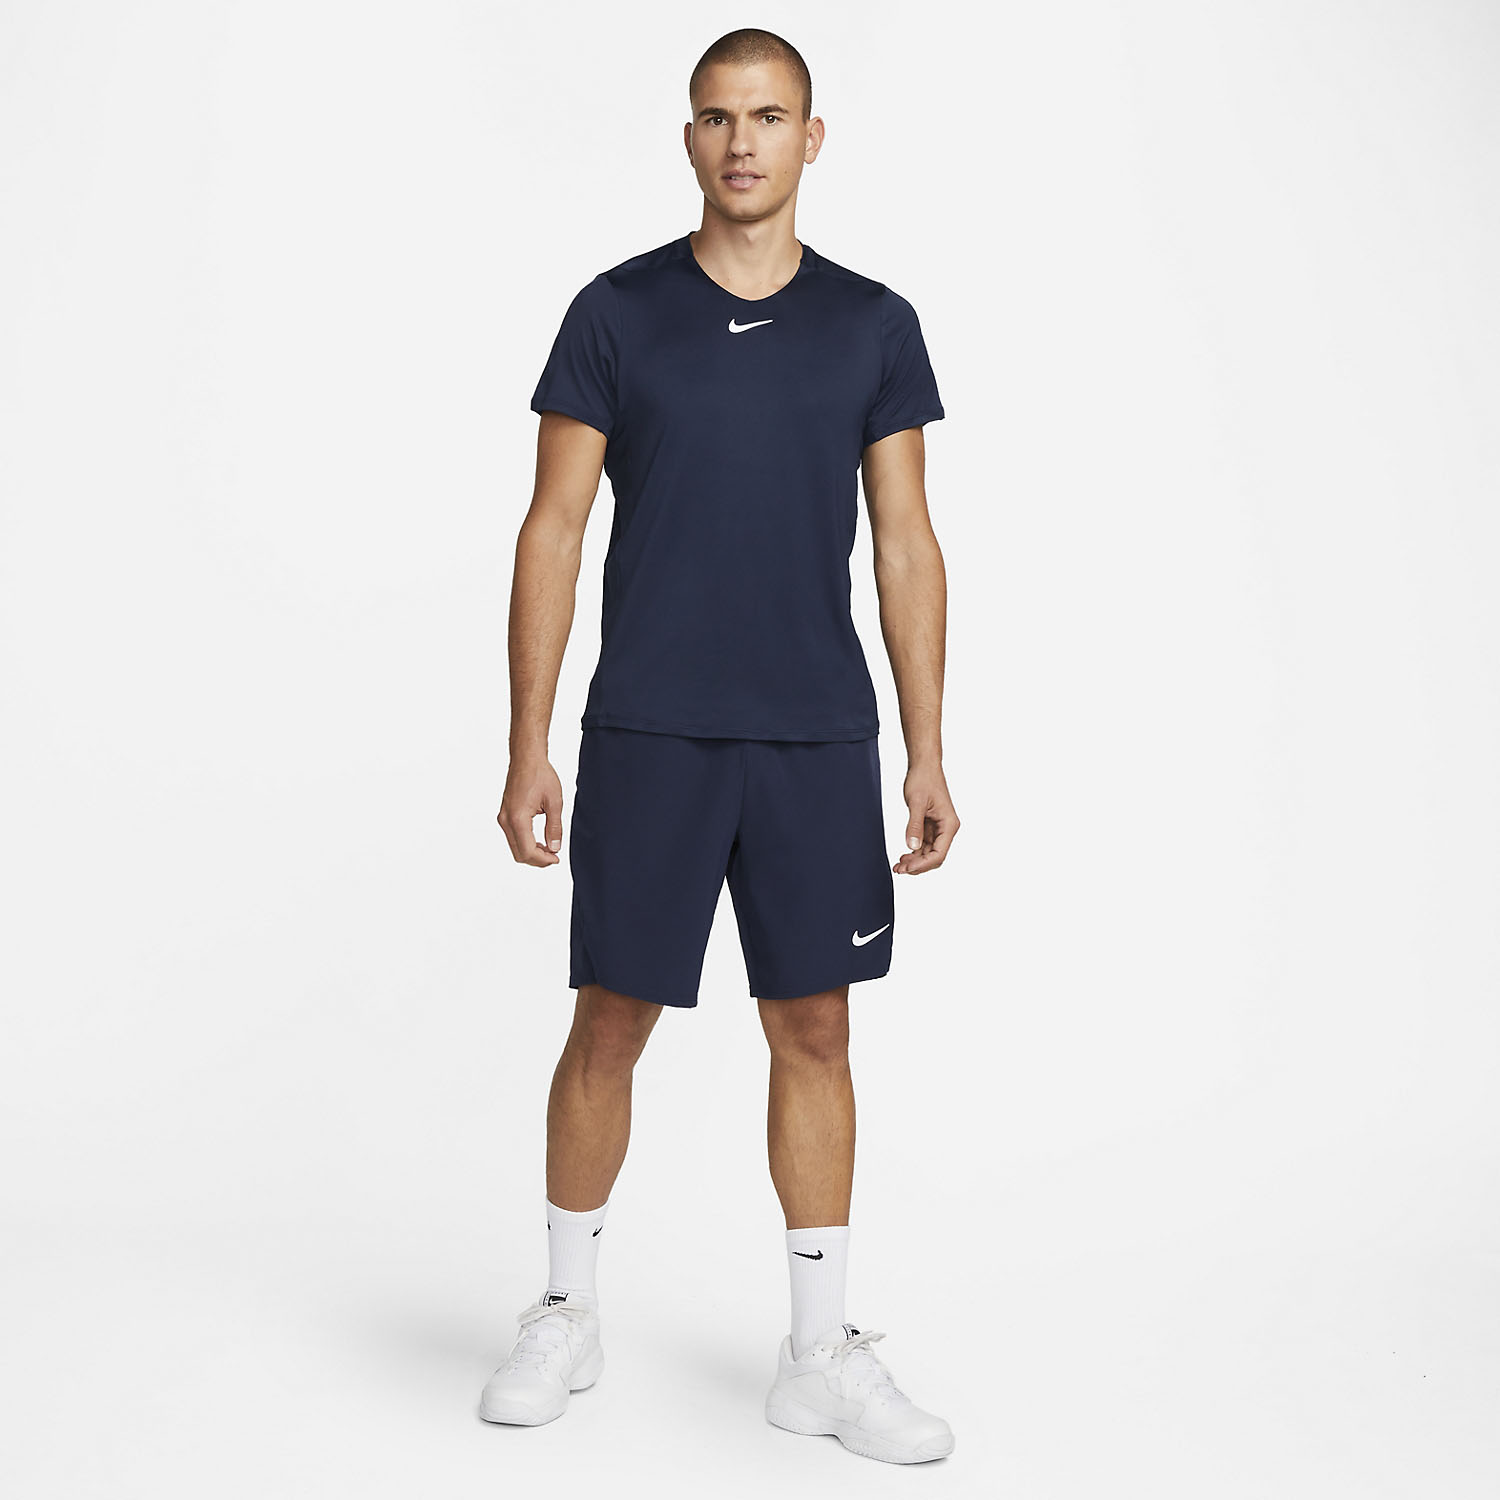 Nike Dri-FIT Advantage Men's Tennis T-Shirt - Obsidian/White